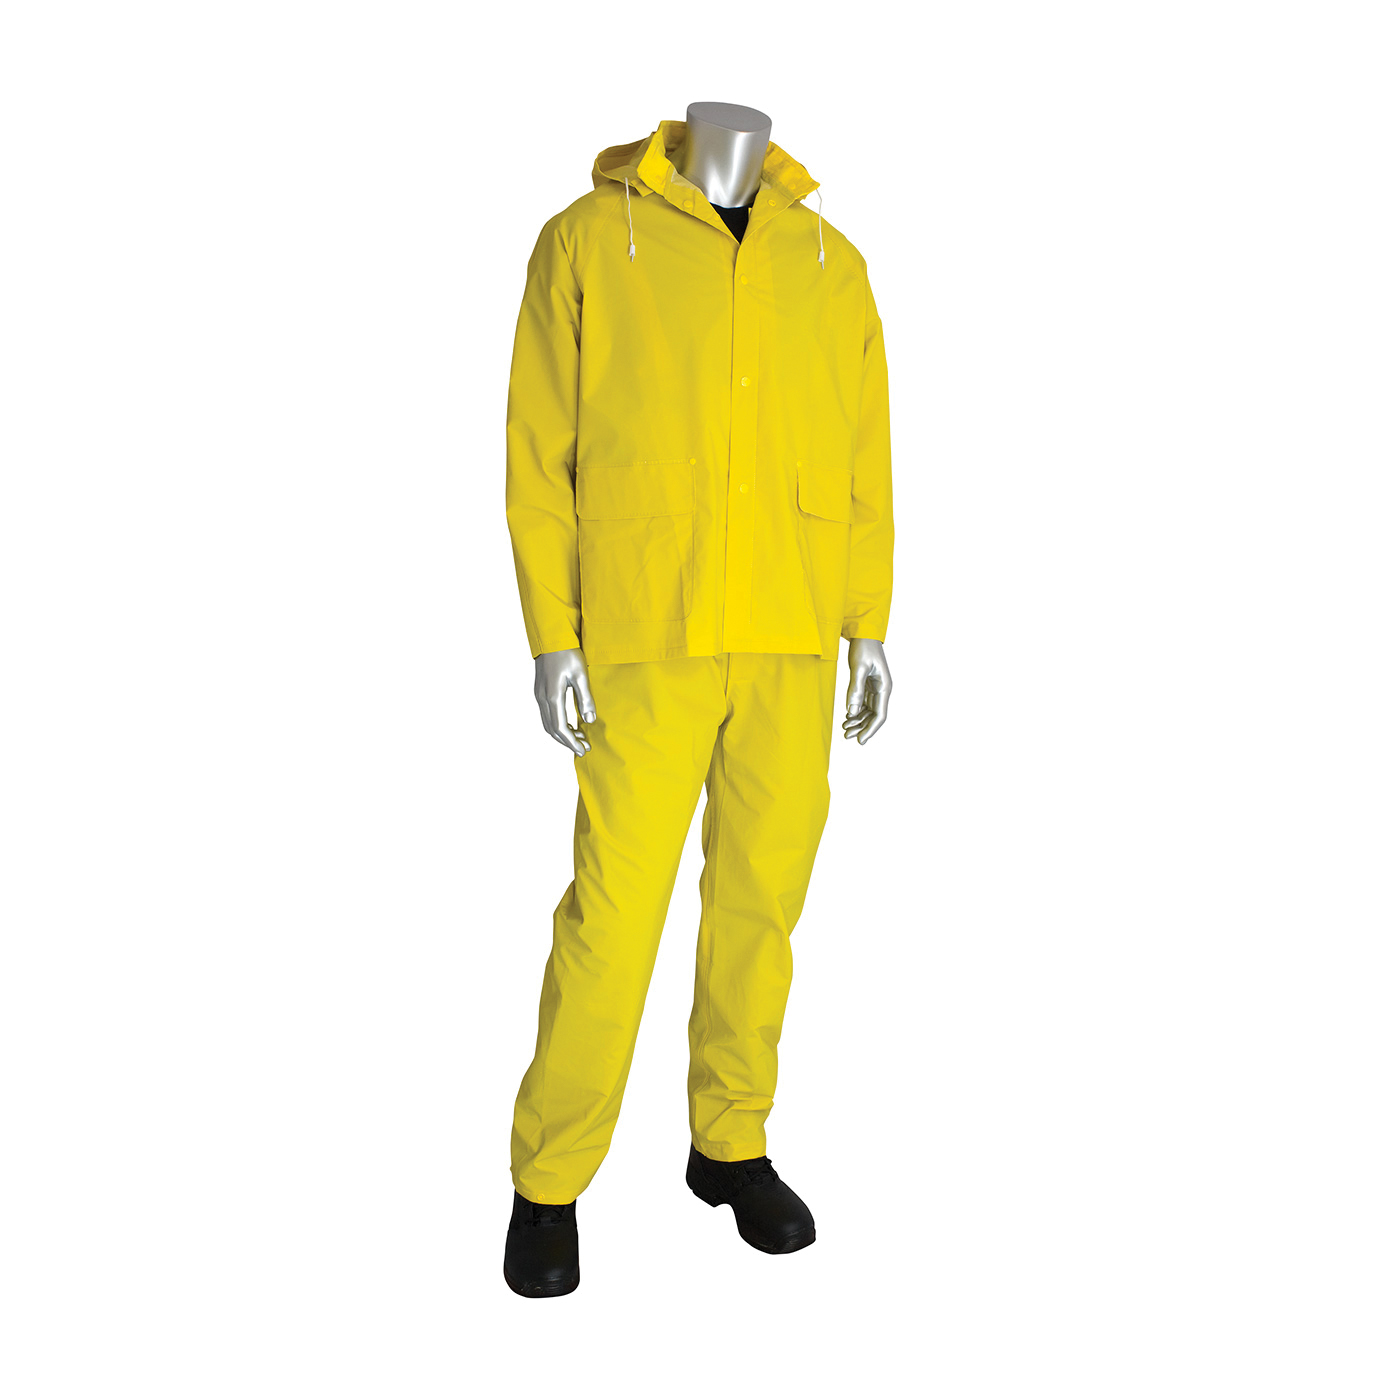 PIP® 201-370X1 3-Piece Premium Rainsuit, XL, Hi-Viz Lime Yellow, Polyester/Corduroy/PVC, 50 in Waist, 31 in L Inseam, Detachable Hood